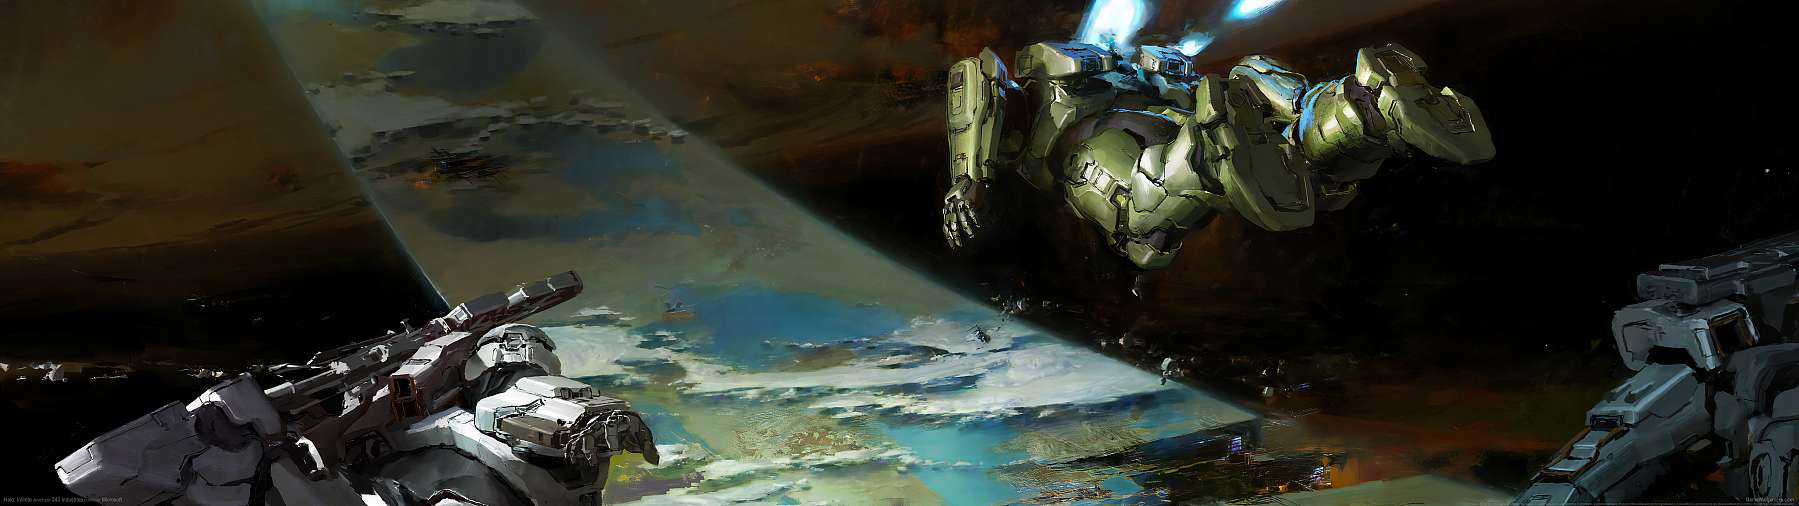 Halo: Infinite superwide achtergrond 29